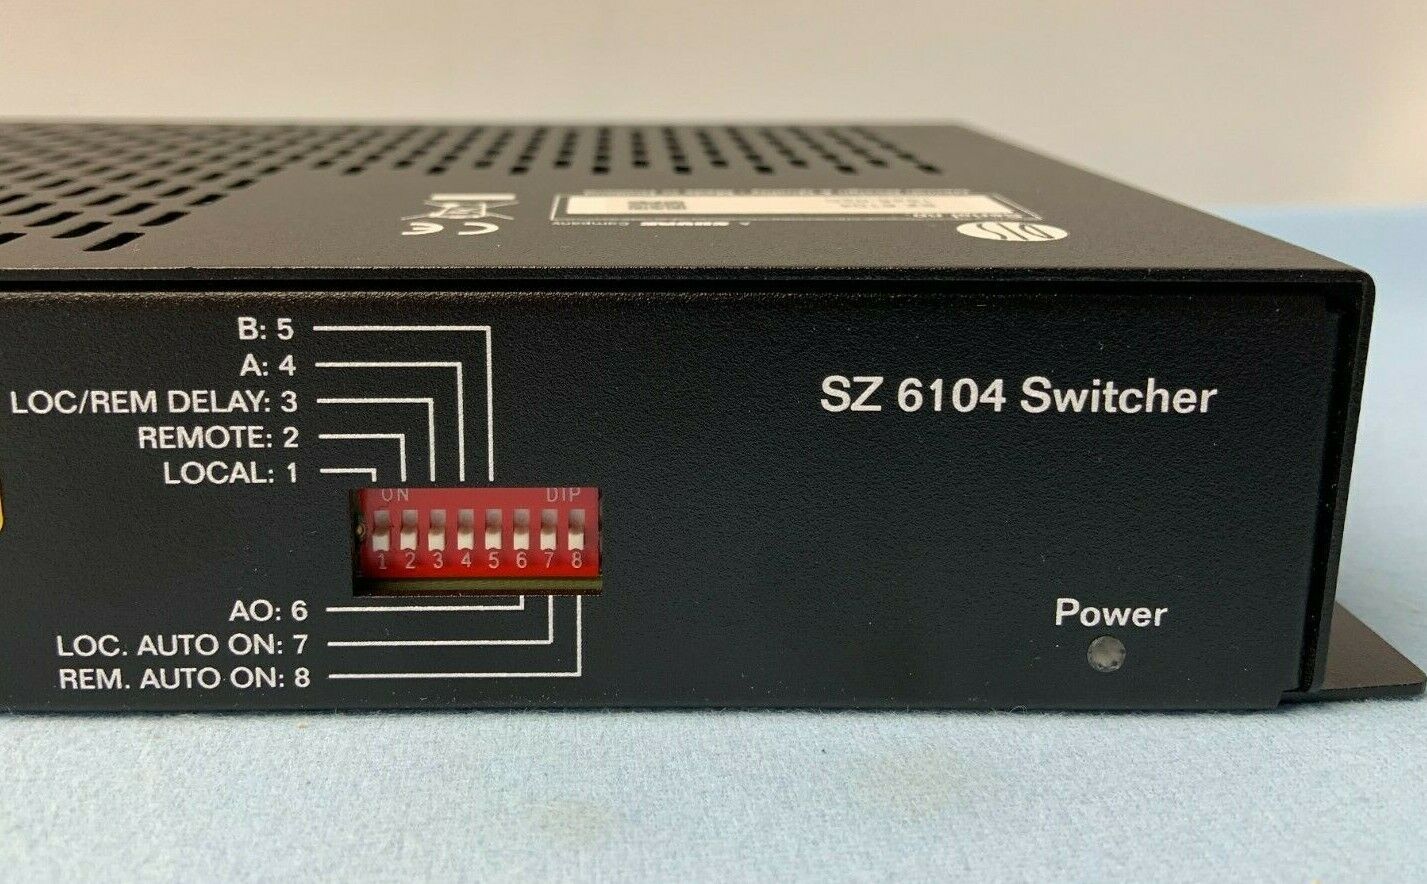 Shure SZ 6104 Switcher for DIS-CCU Central Units